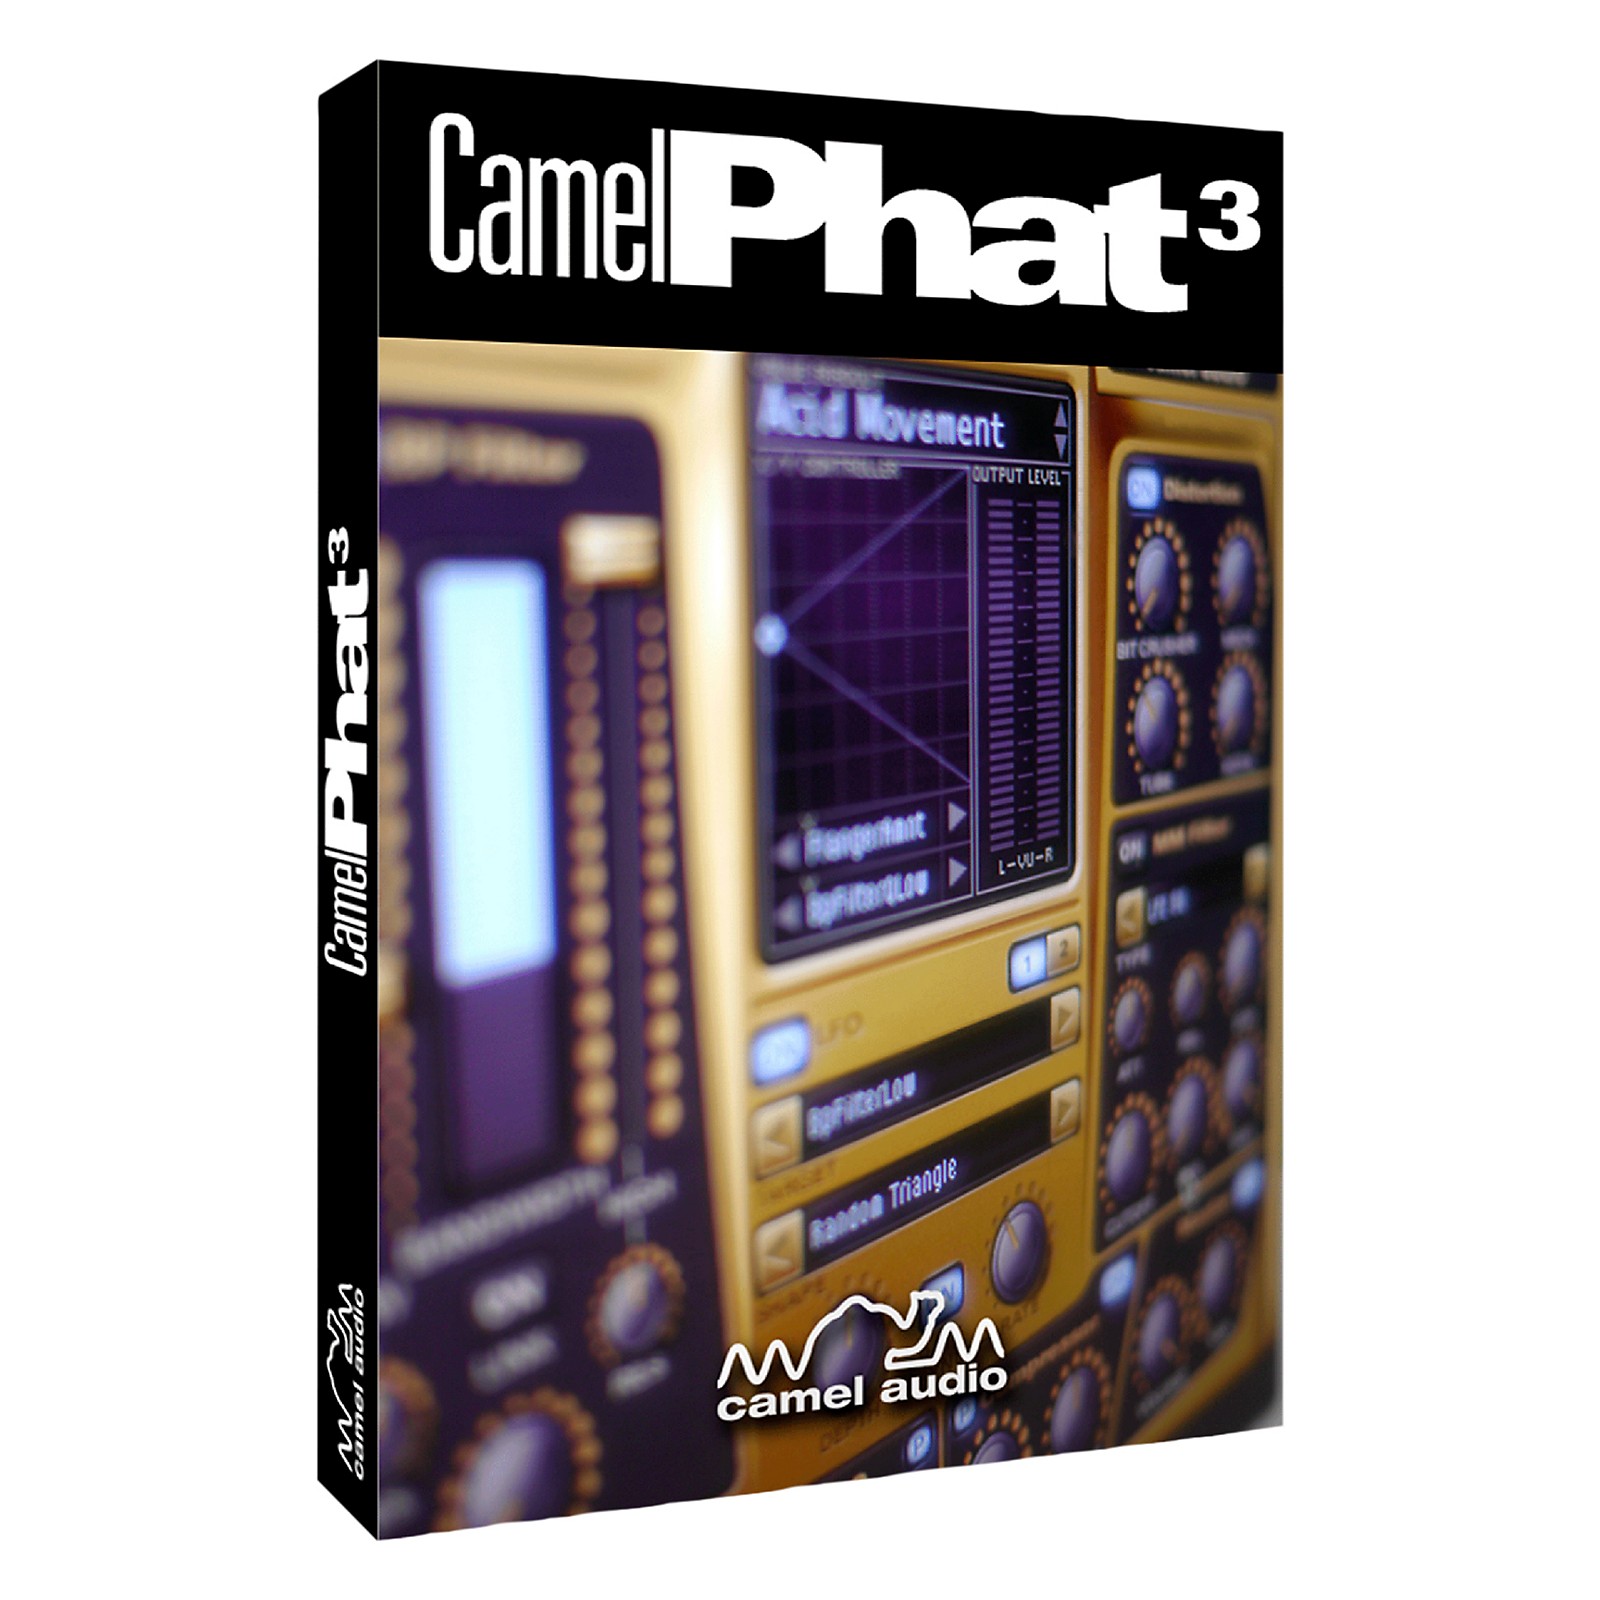 Camelphat 64-bit mac download version